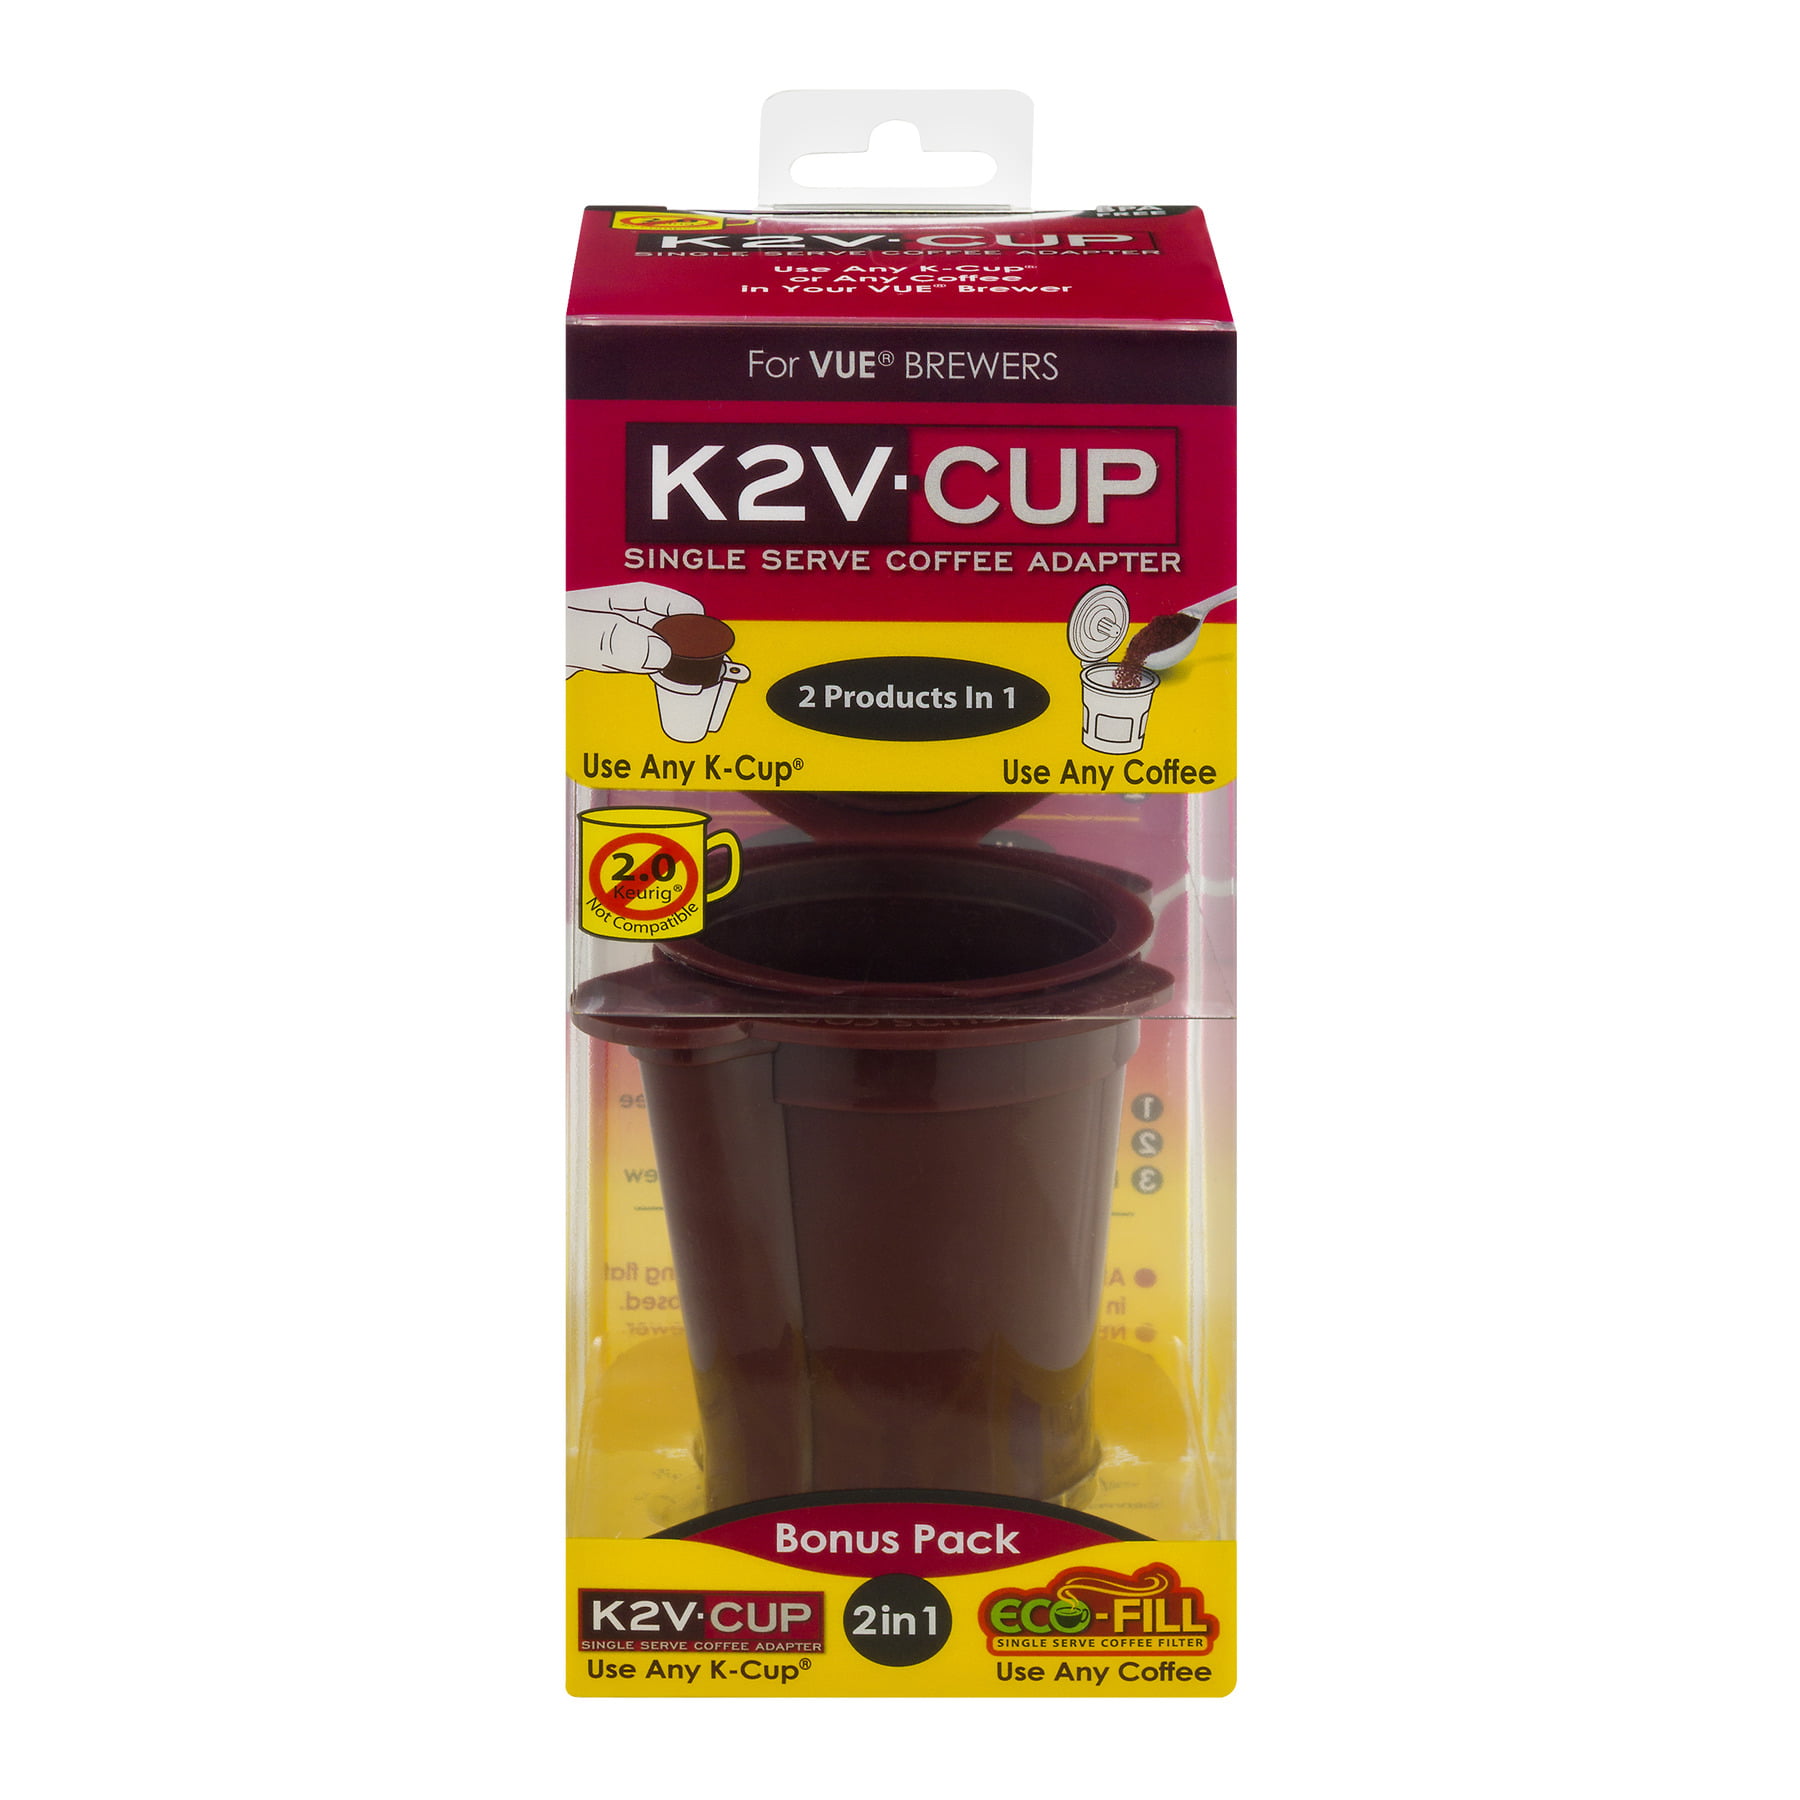 V cup. Адаптер для k-Cup. K2brewer воронка. 400gr v Cups. Vue Cup portion Packs.